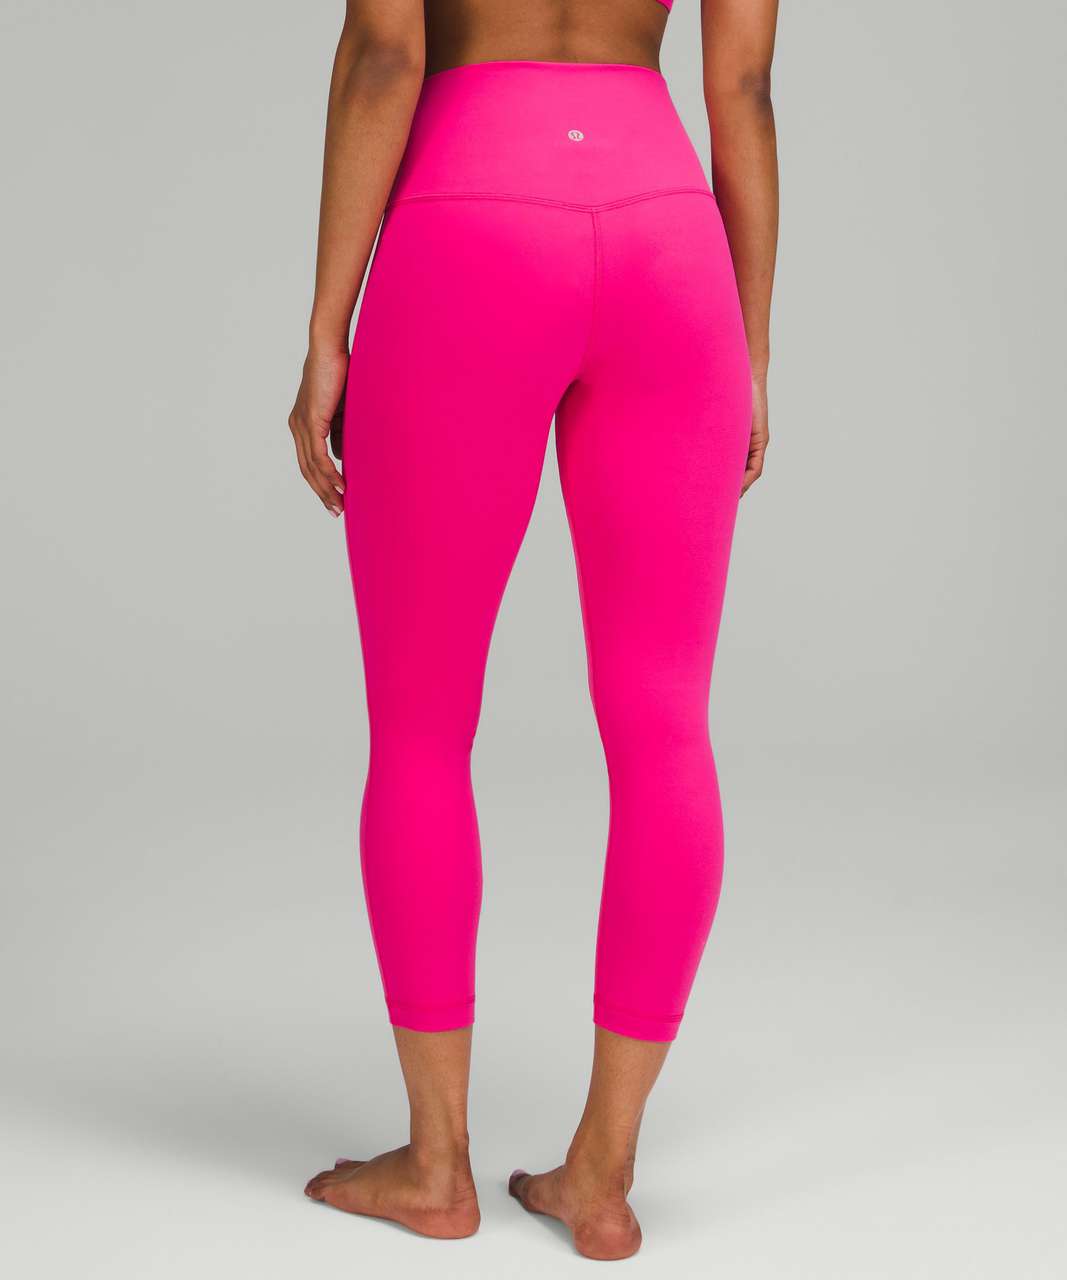 Lululemon align light pink leggings Size 2 - $85 (19% Off Retail) - From  katie